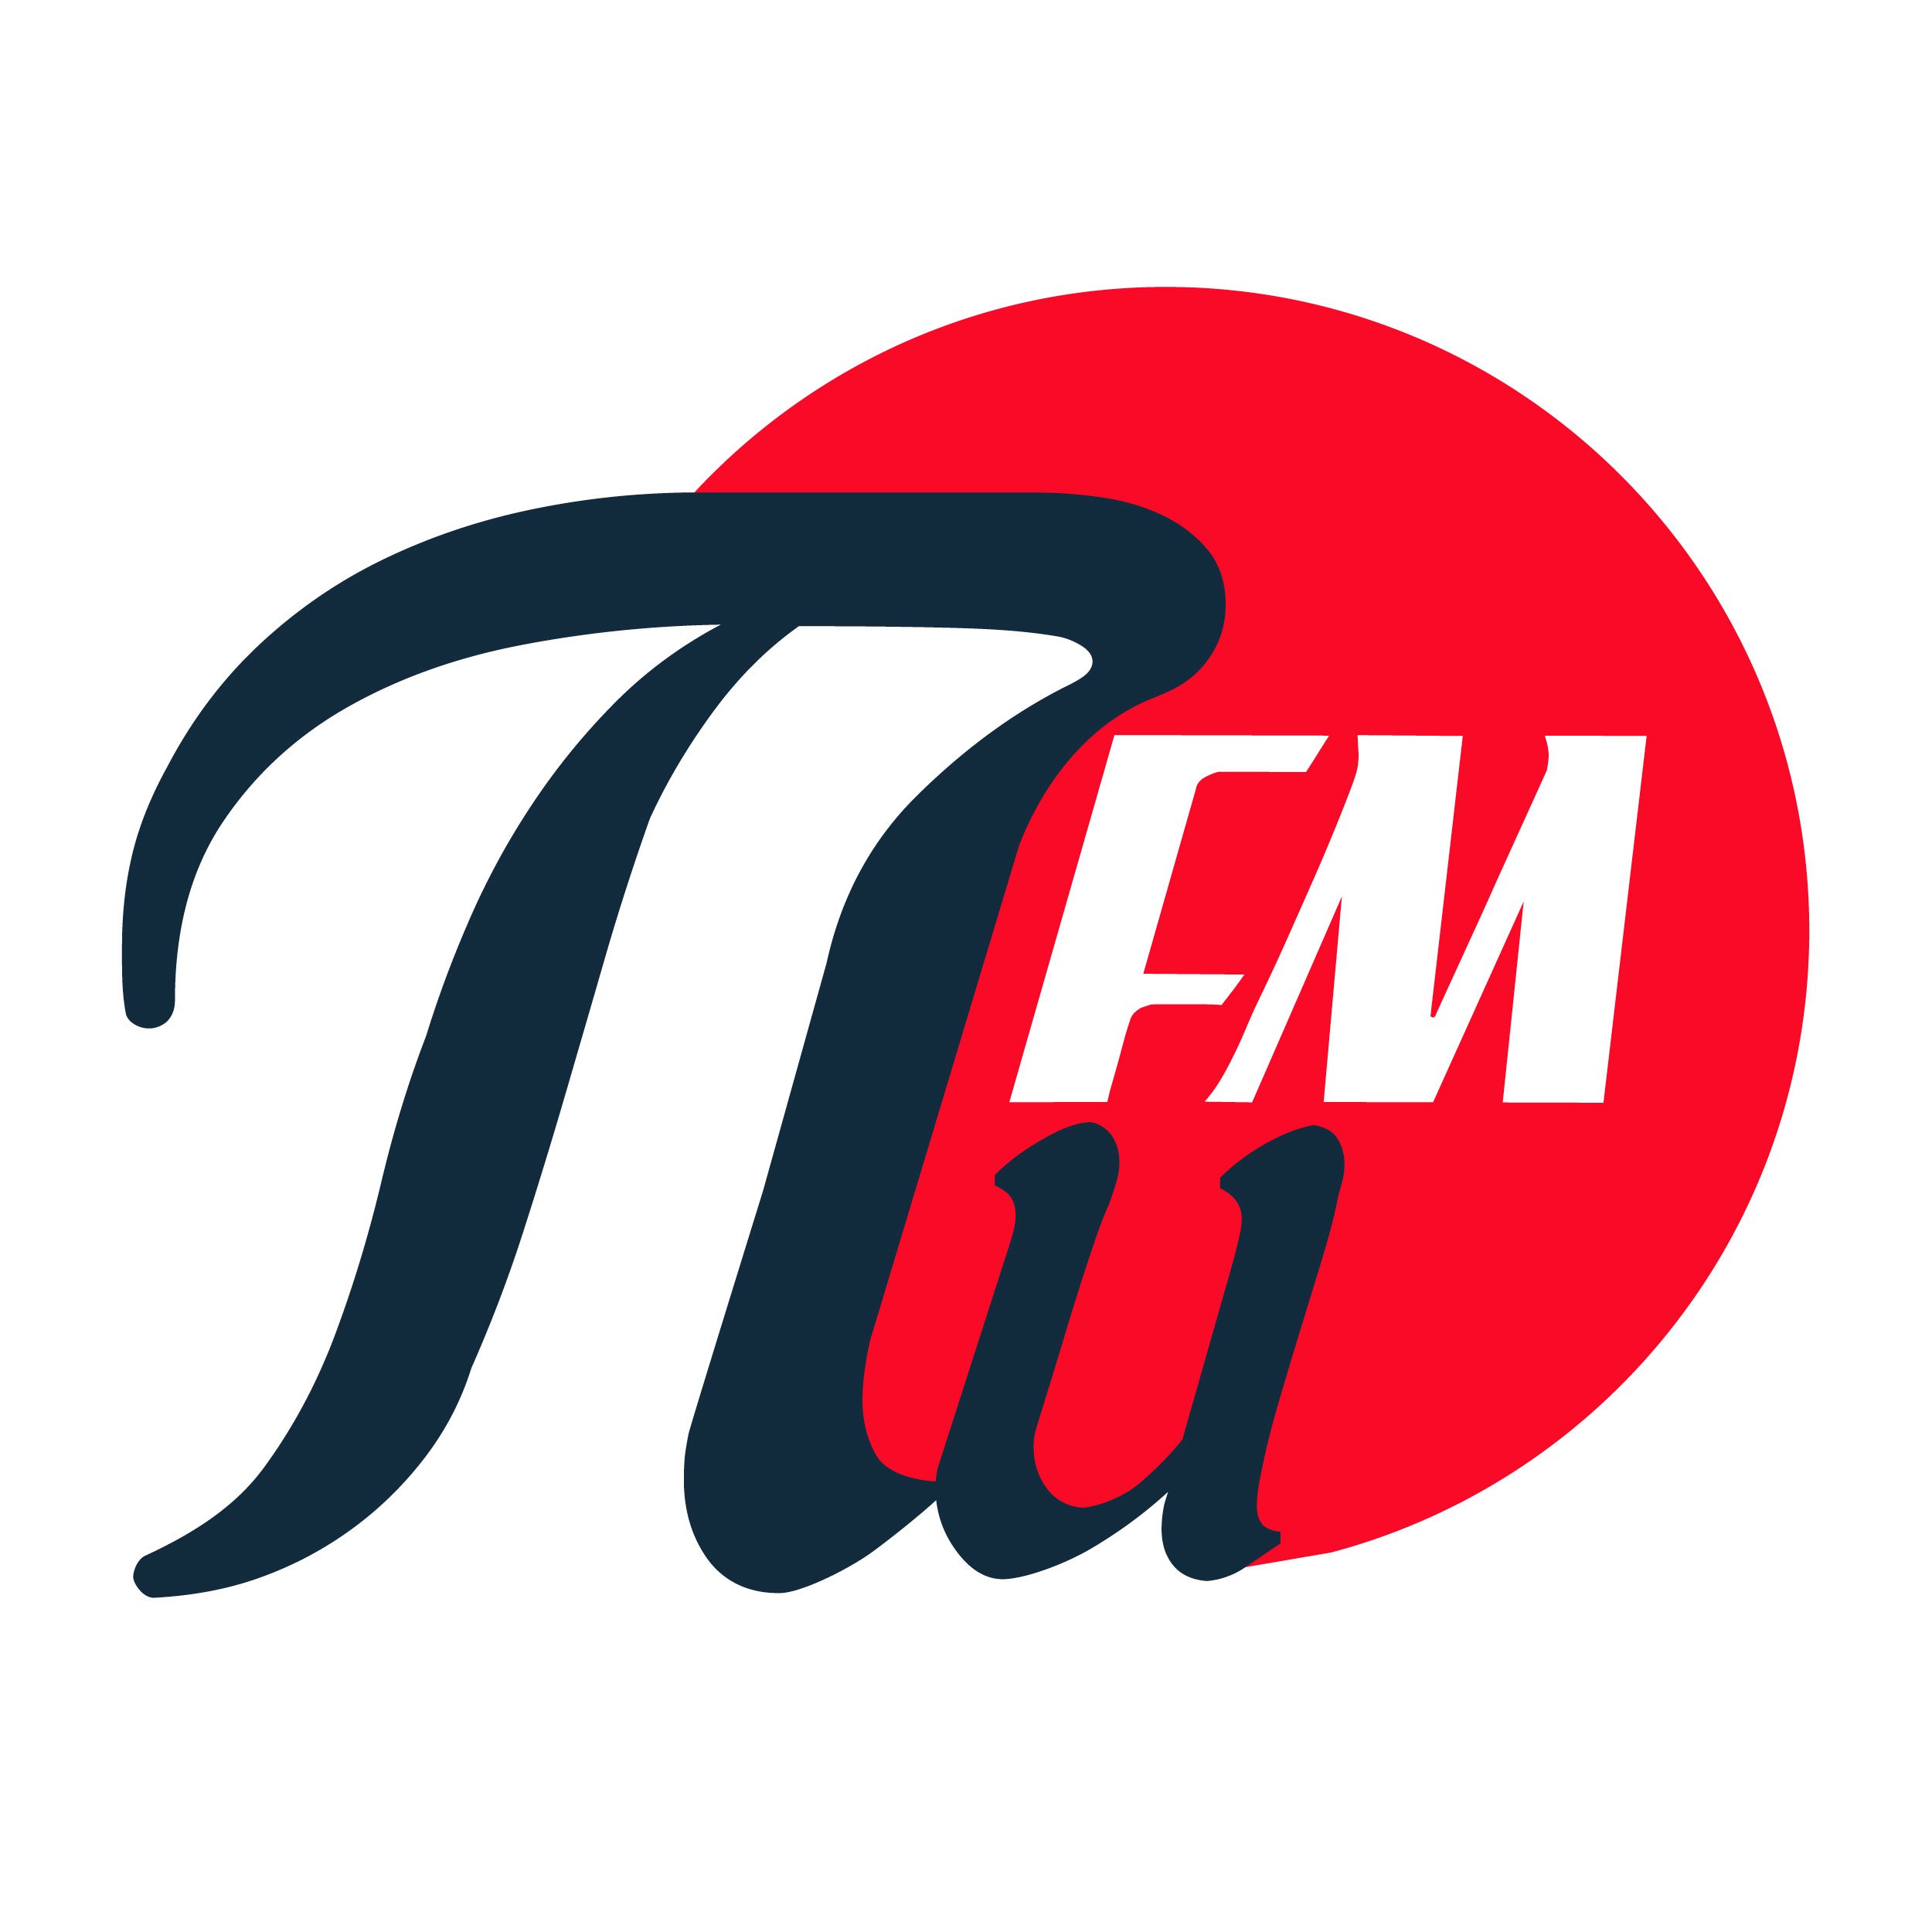 Hflbj av. Пи ФМ. Логотипы радиостанций. Pi ФМ логотип. Радио PIFM fm.